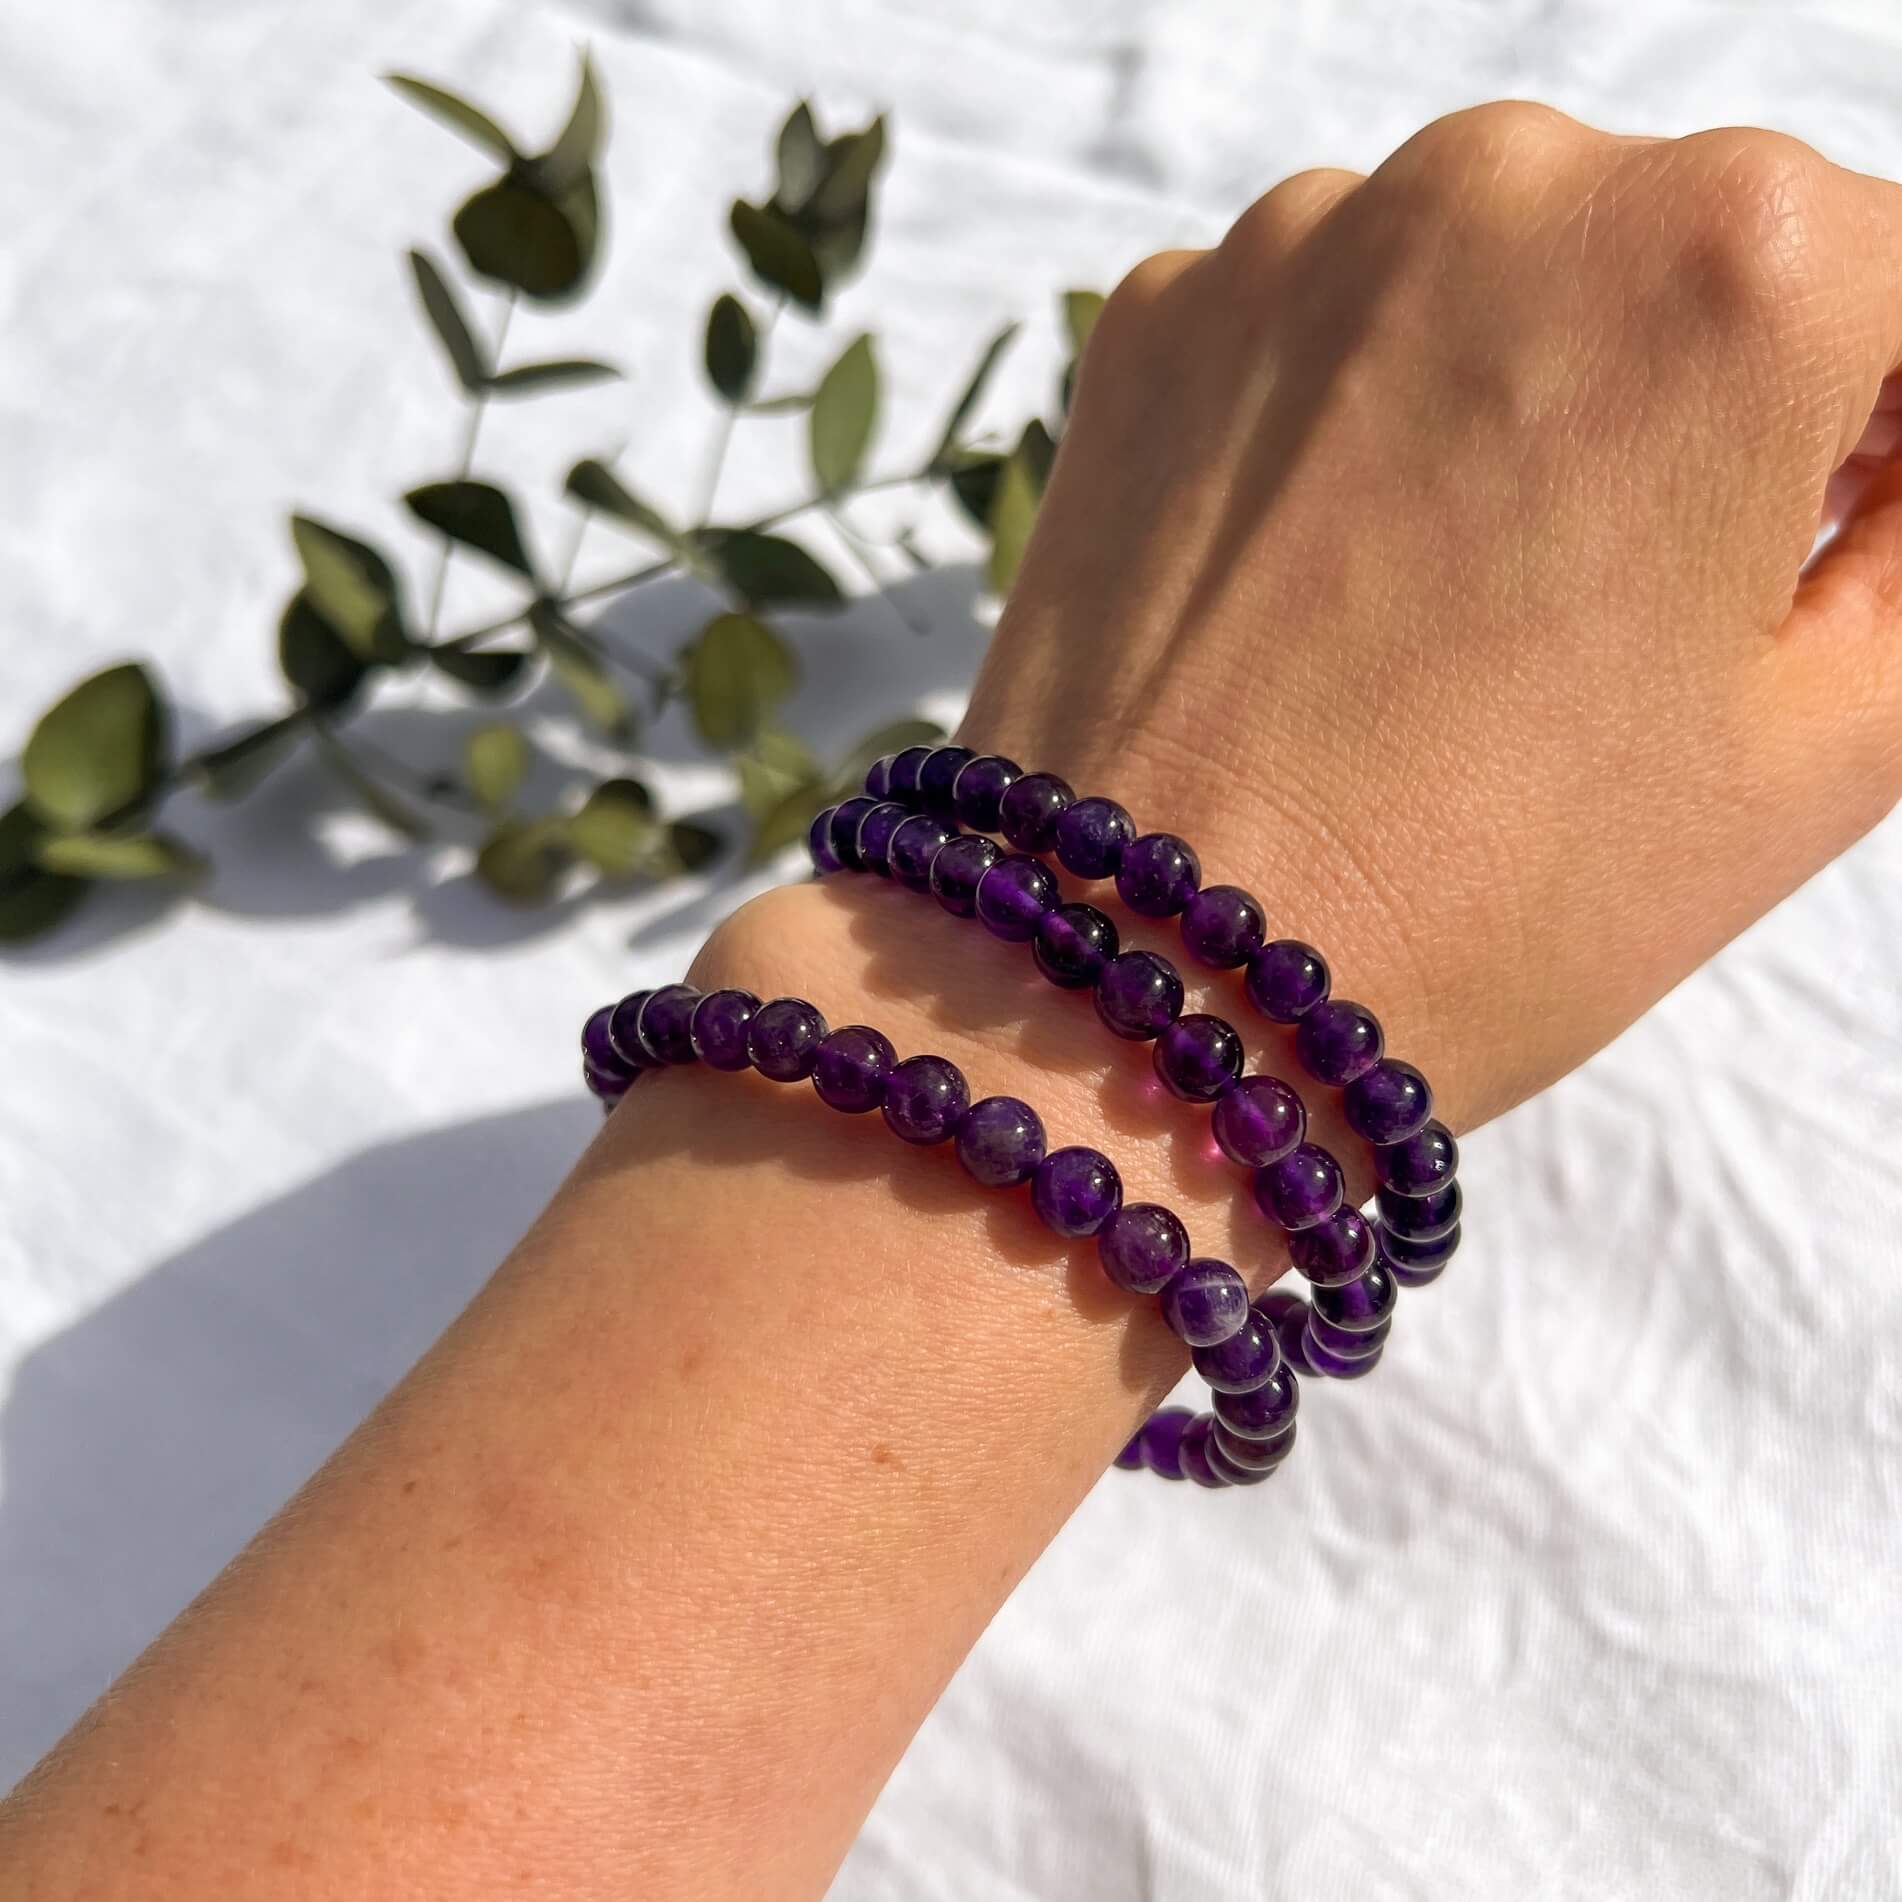 A woman's arm with three bright purple amethyst crystal bead bracelets